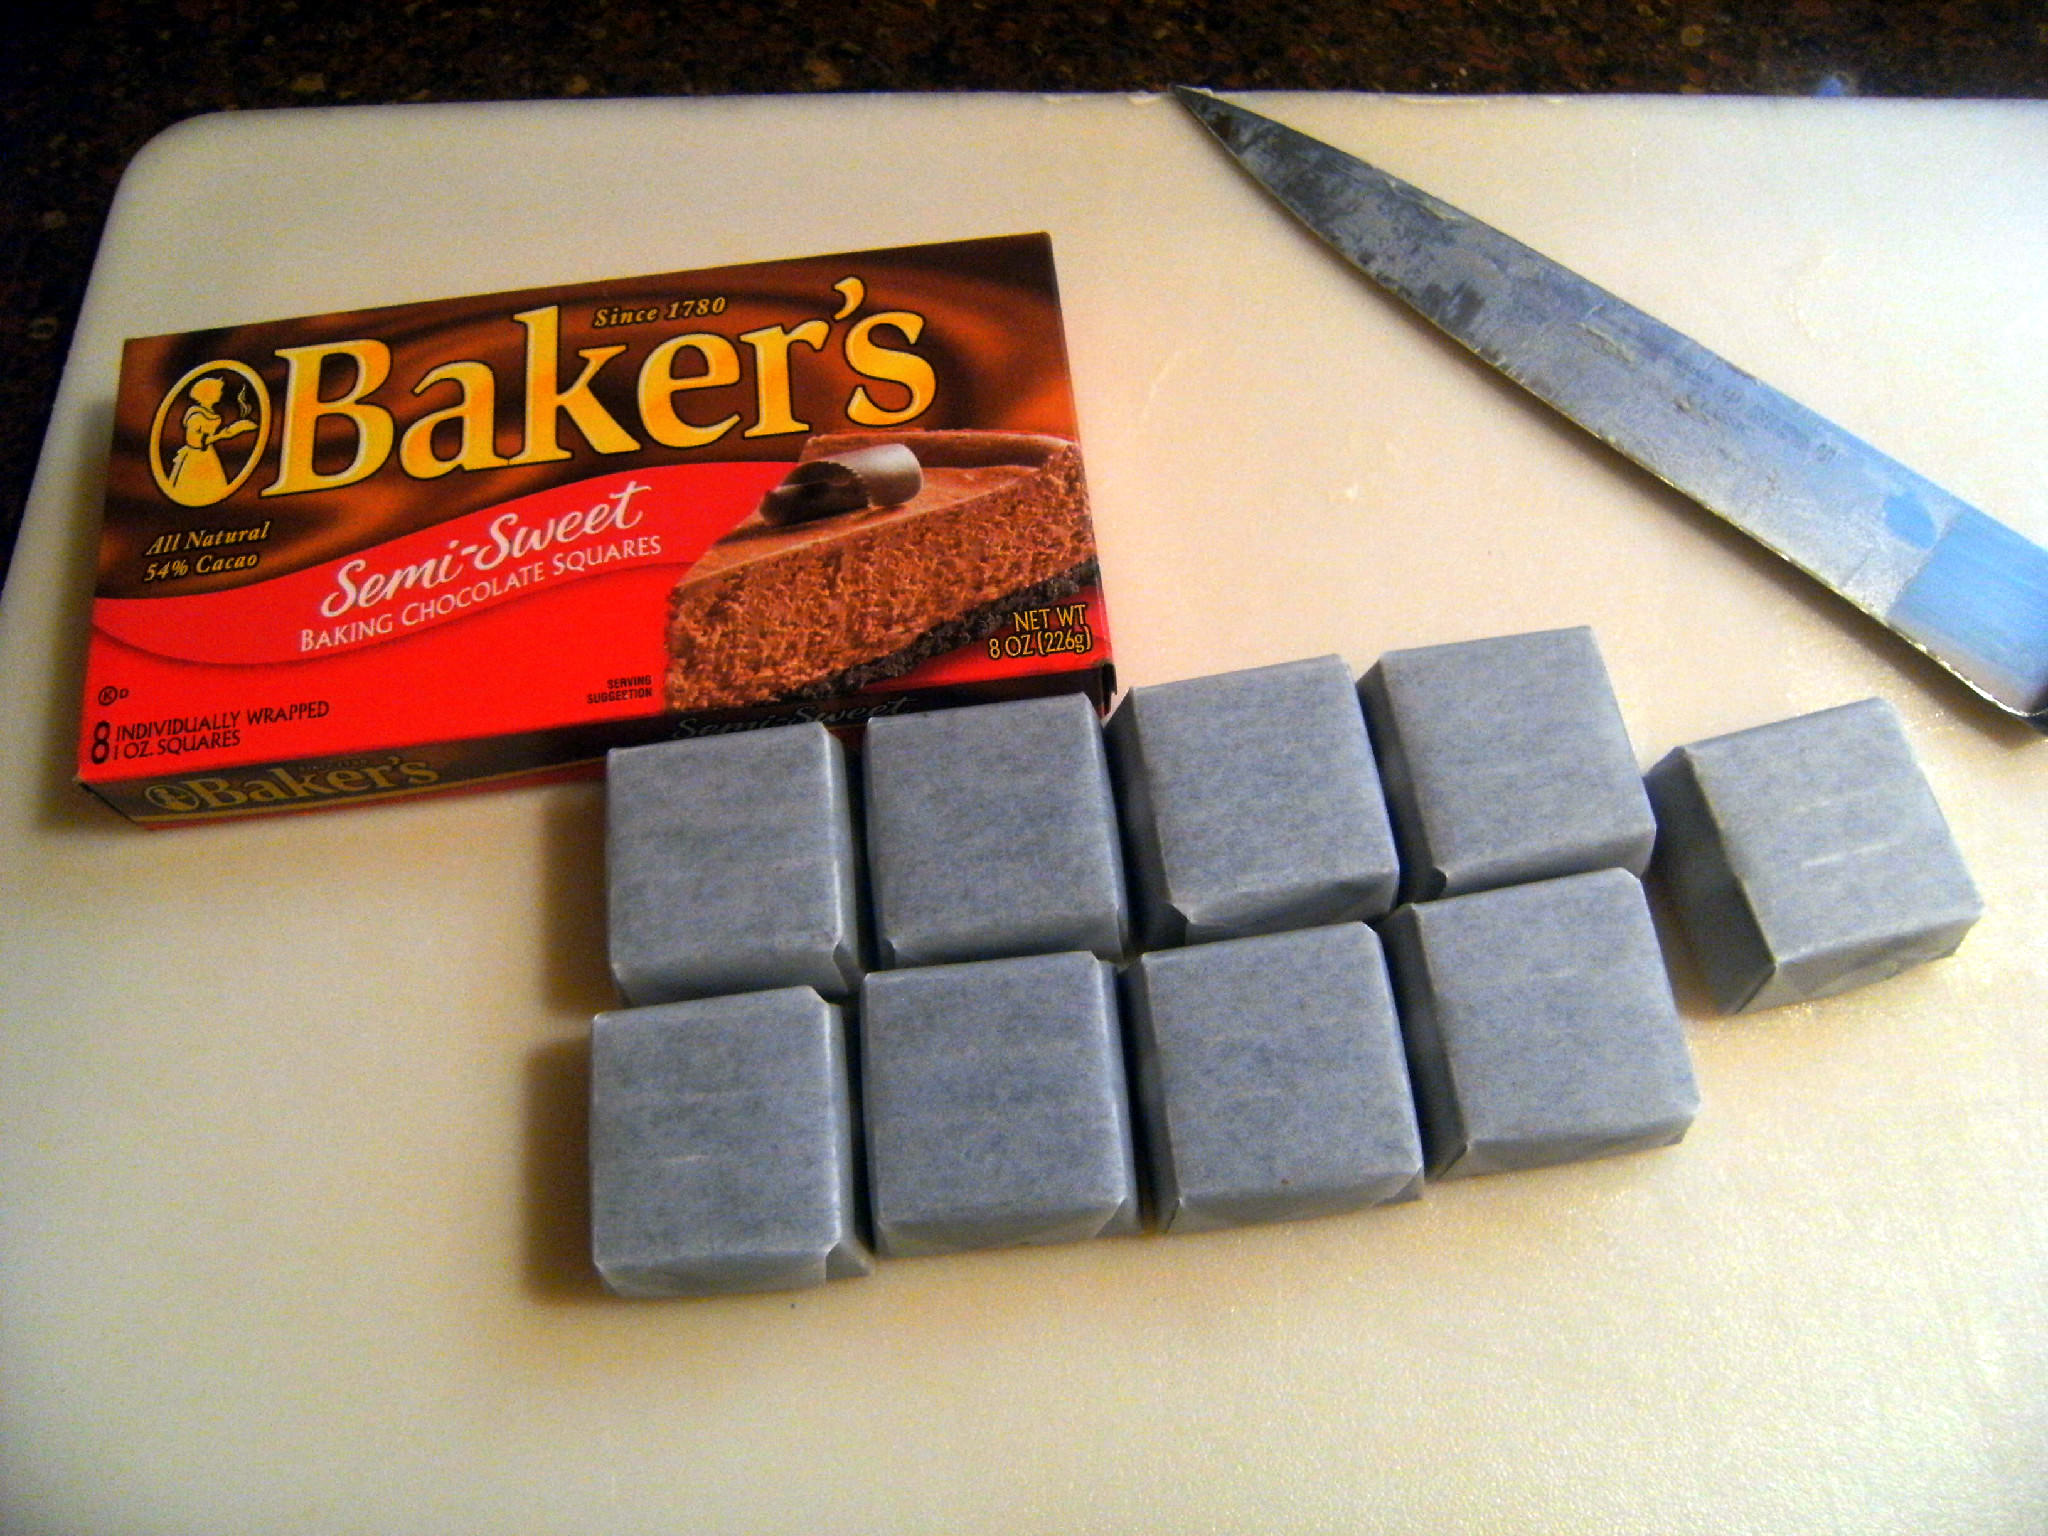 Baker's semi-sweet baking chocolate